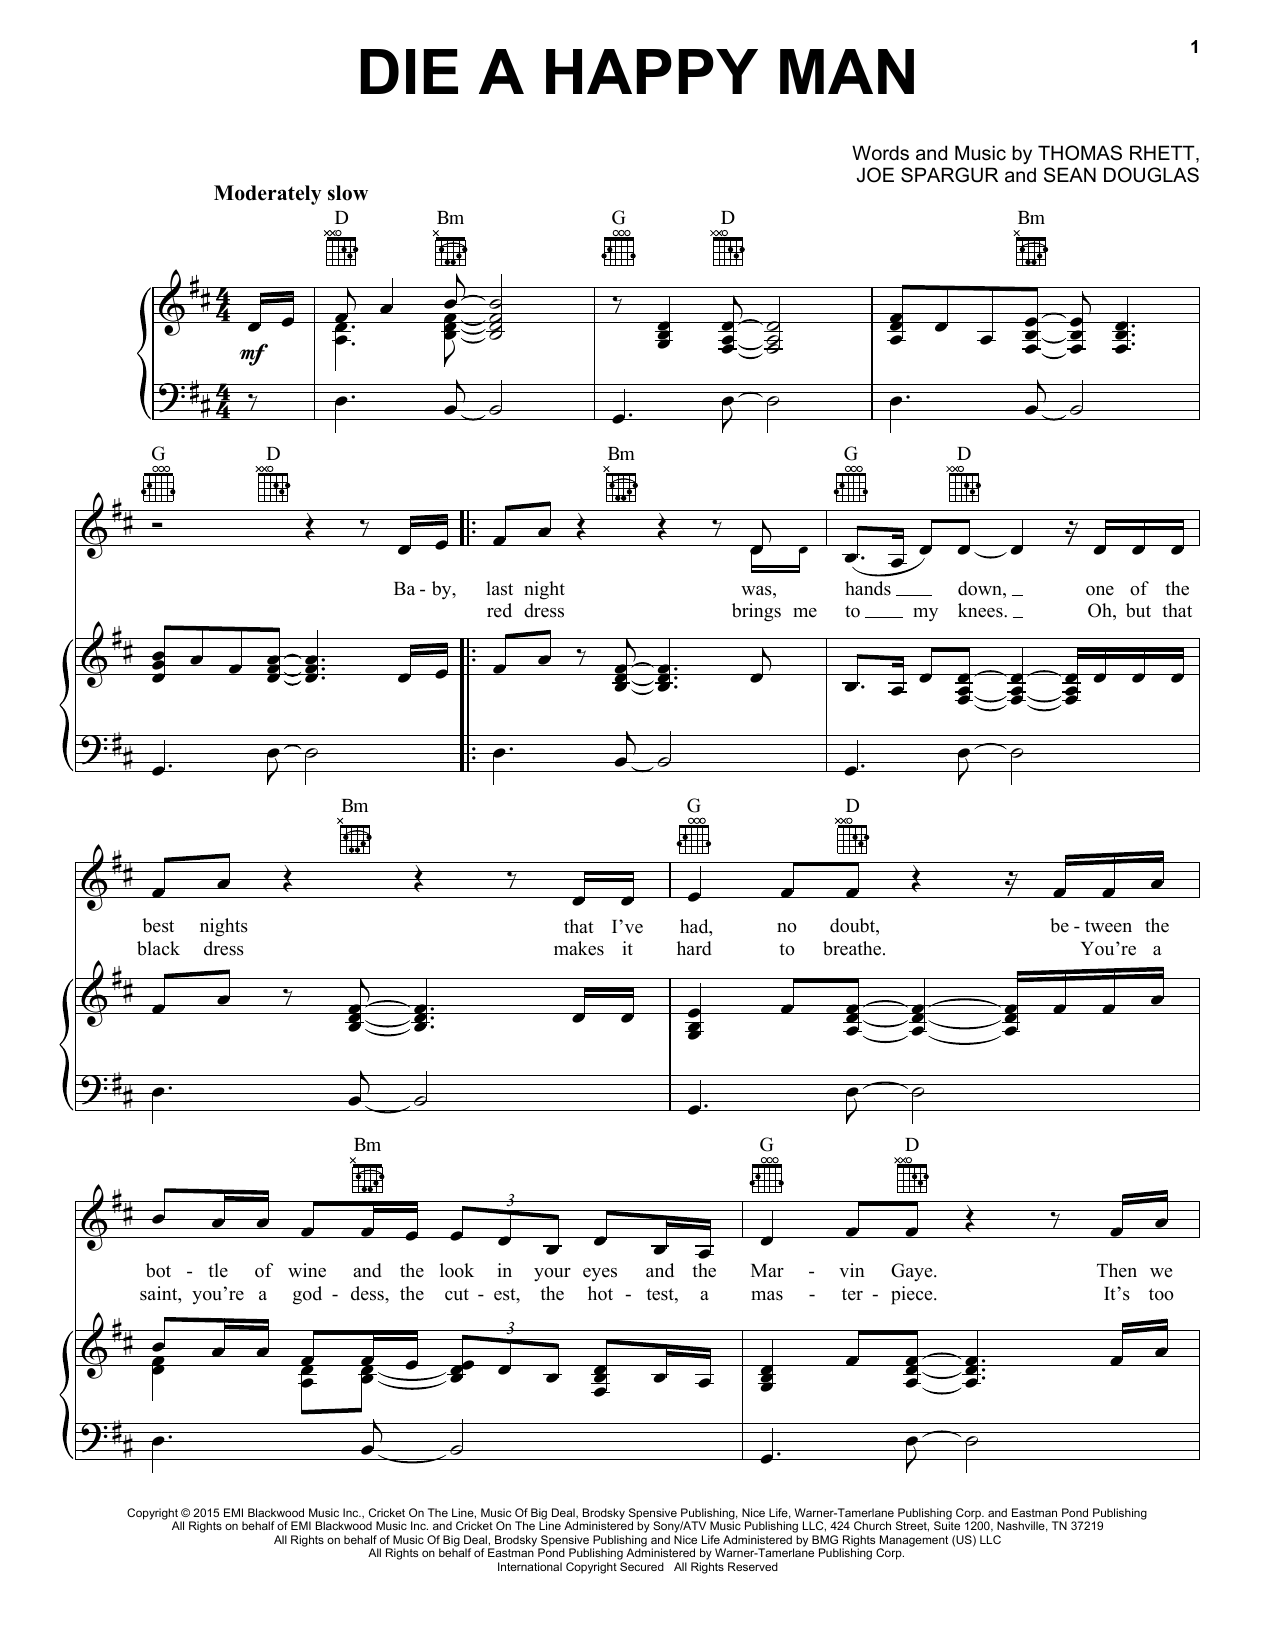 Thomas Rhett Die A Happy Man Sheet Music Notes & Chords for Alto Saxophone - Download or Print PDF